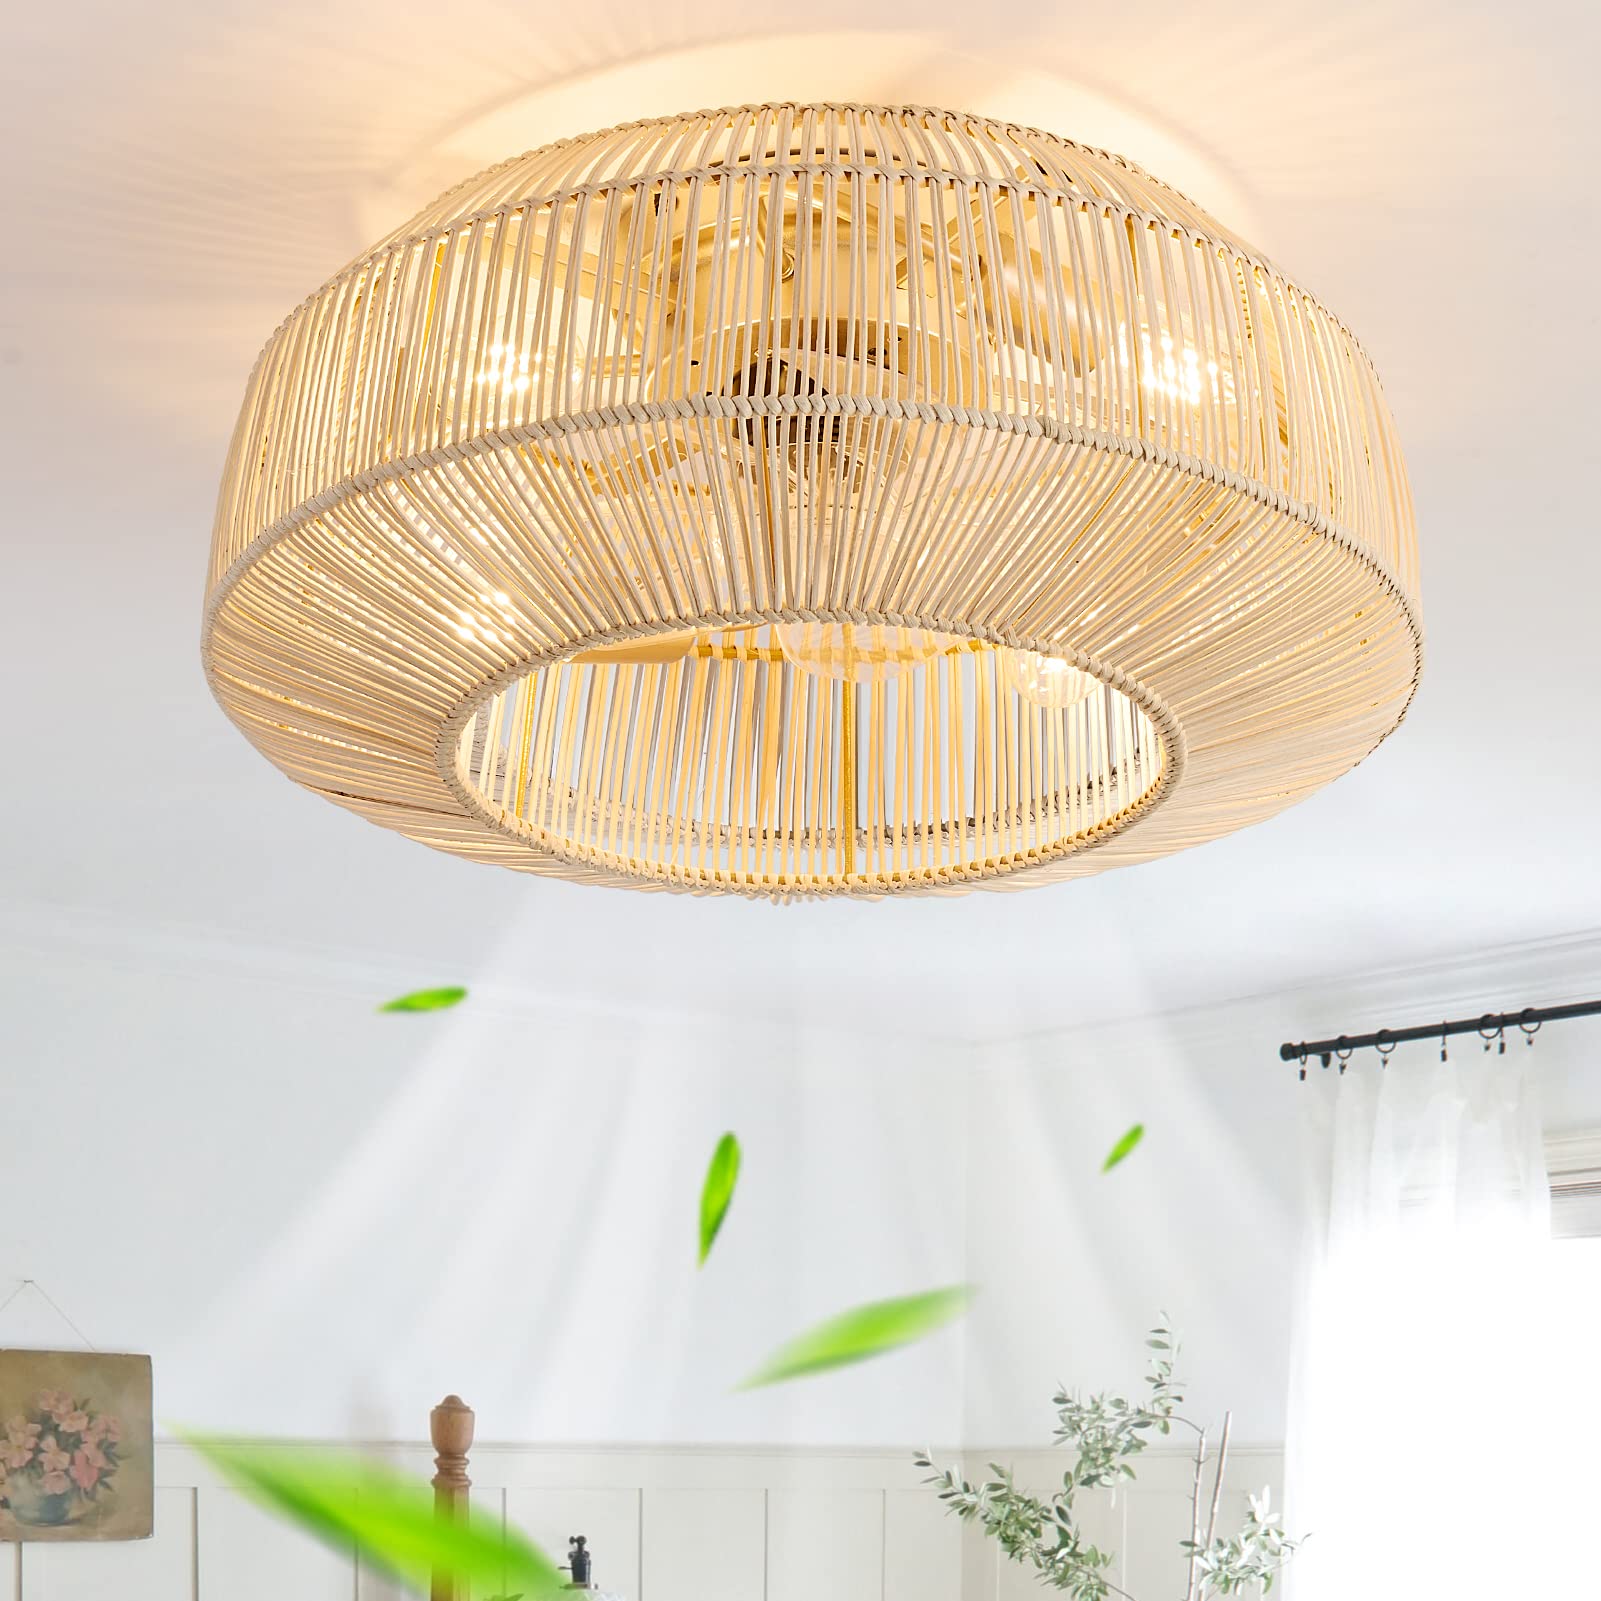 zheshirui 20" Boho Caged Ceiling Fan with Lights Flush Mount